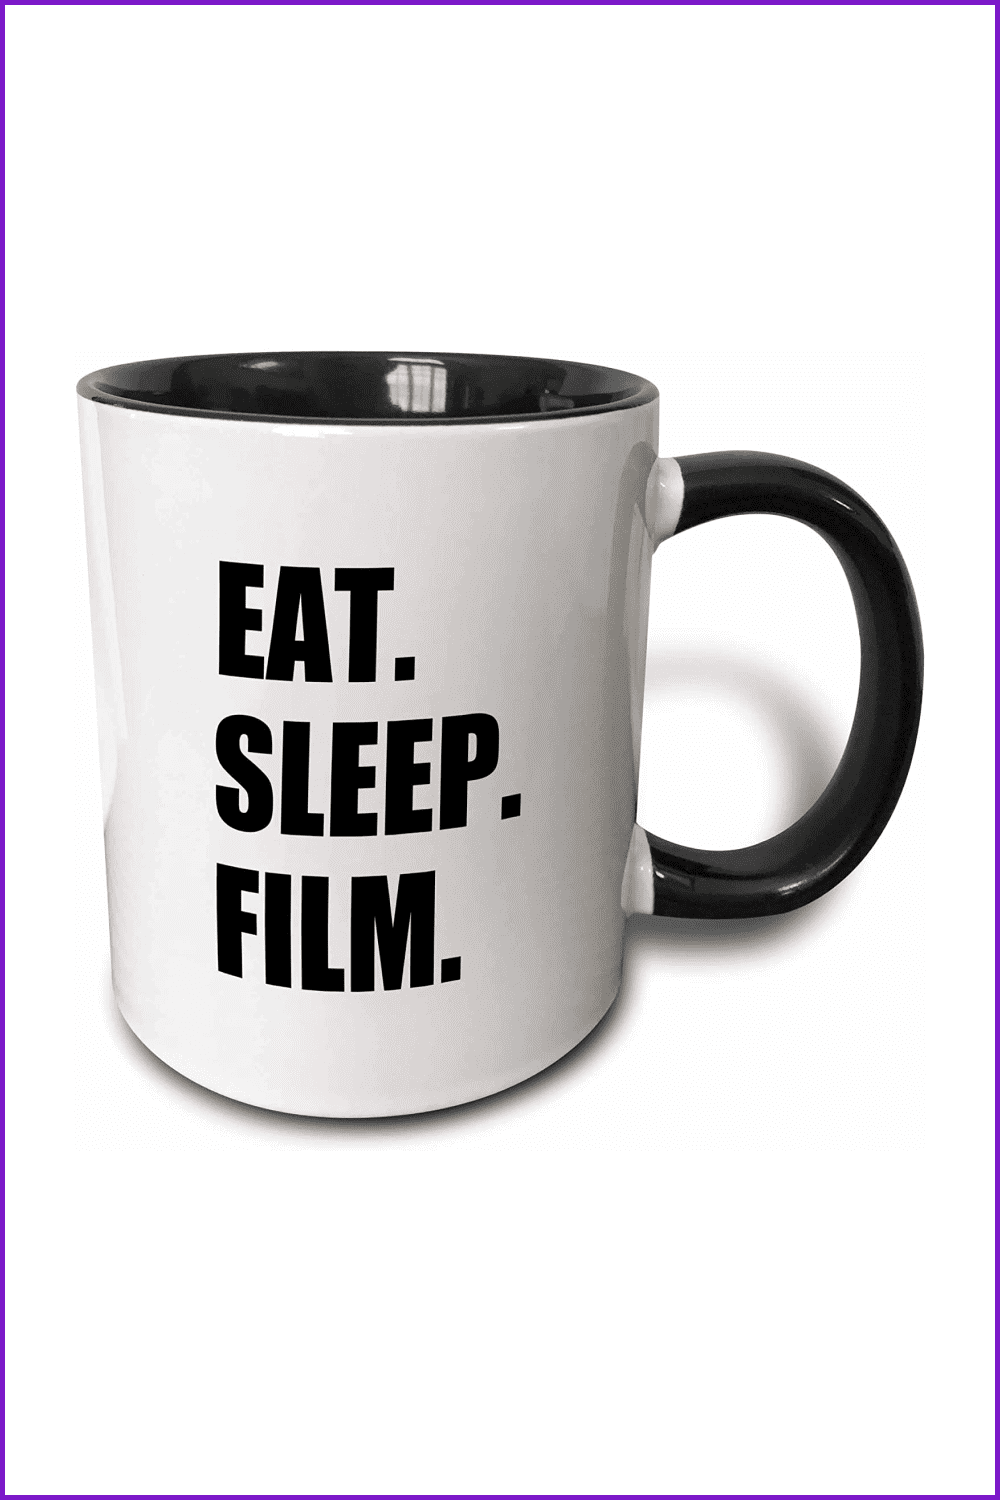 White mug with sign - Eat Sleep Film.